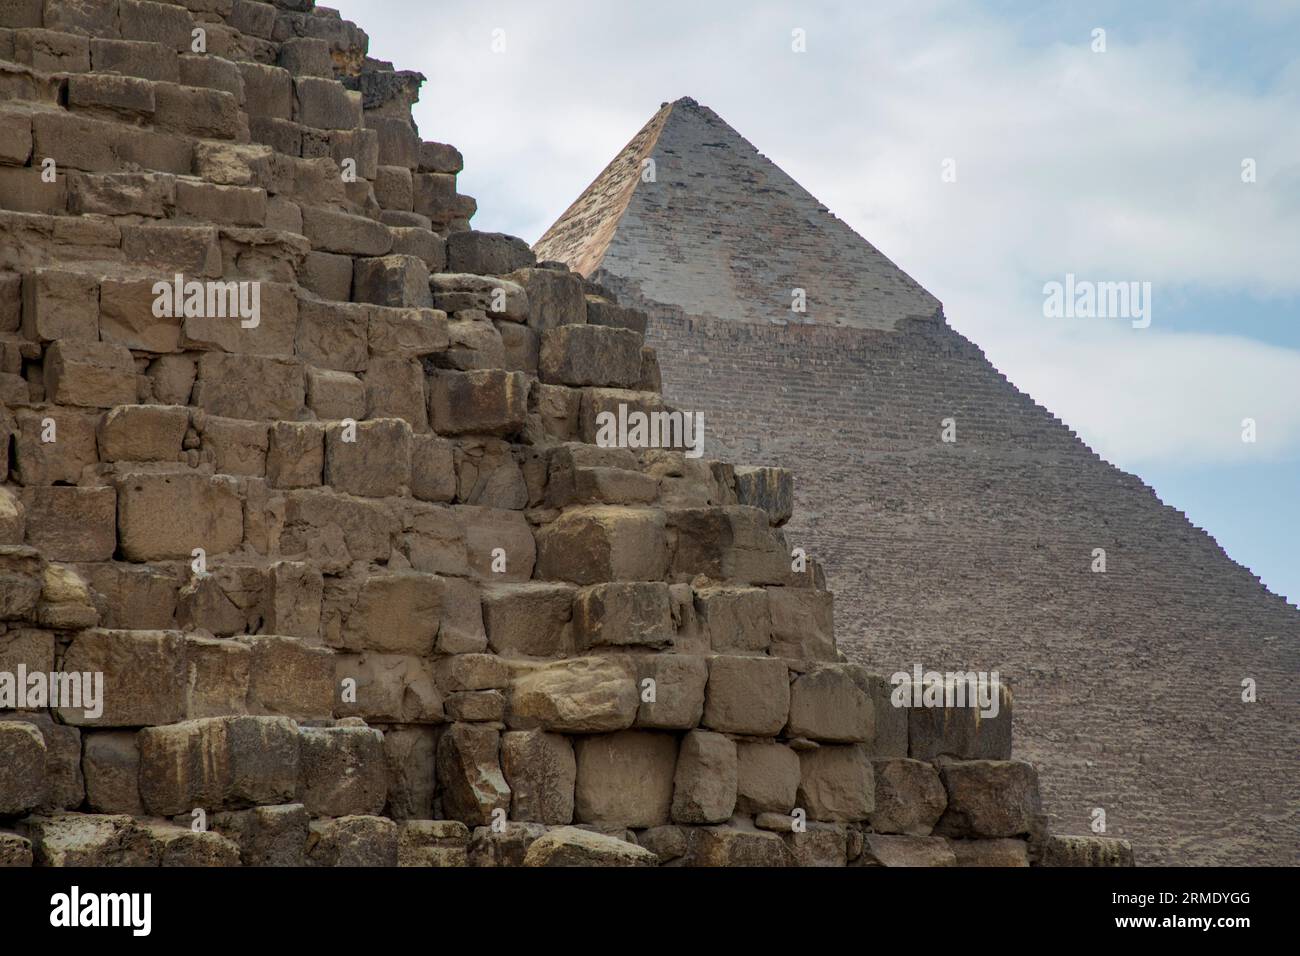 Close up view of a Pyramid wall at the Great Pyramids of Giza Stock Photo